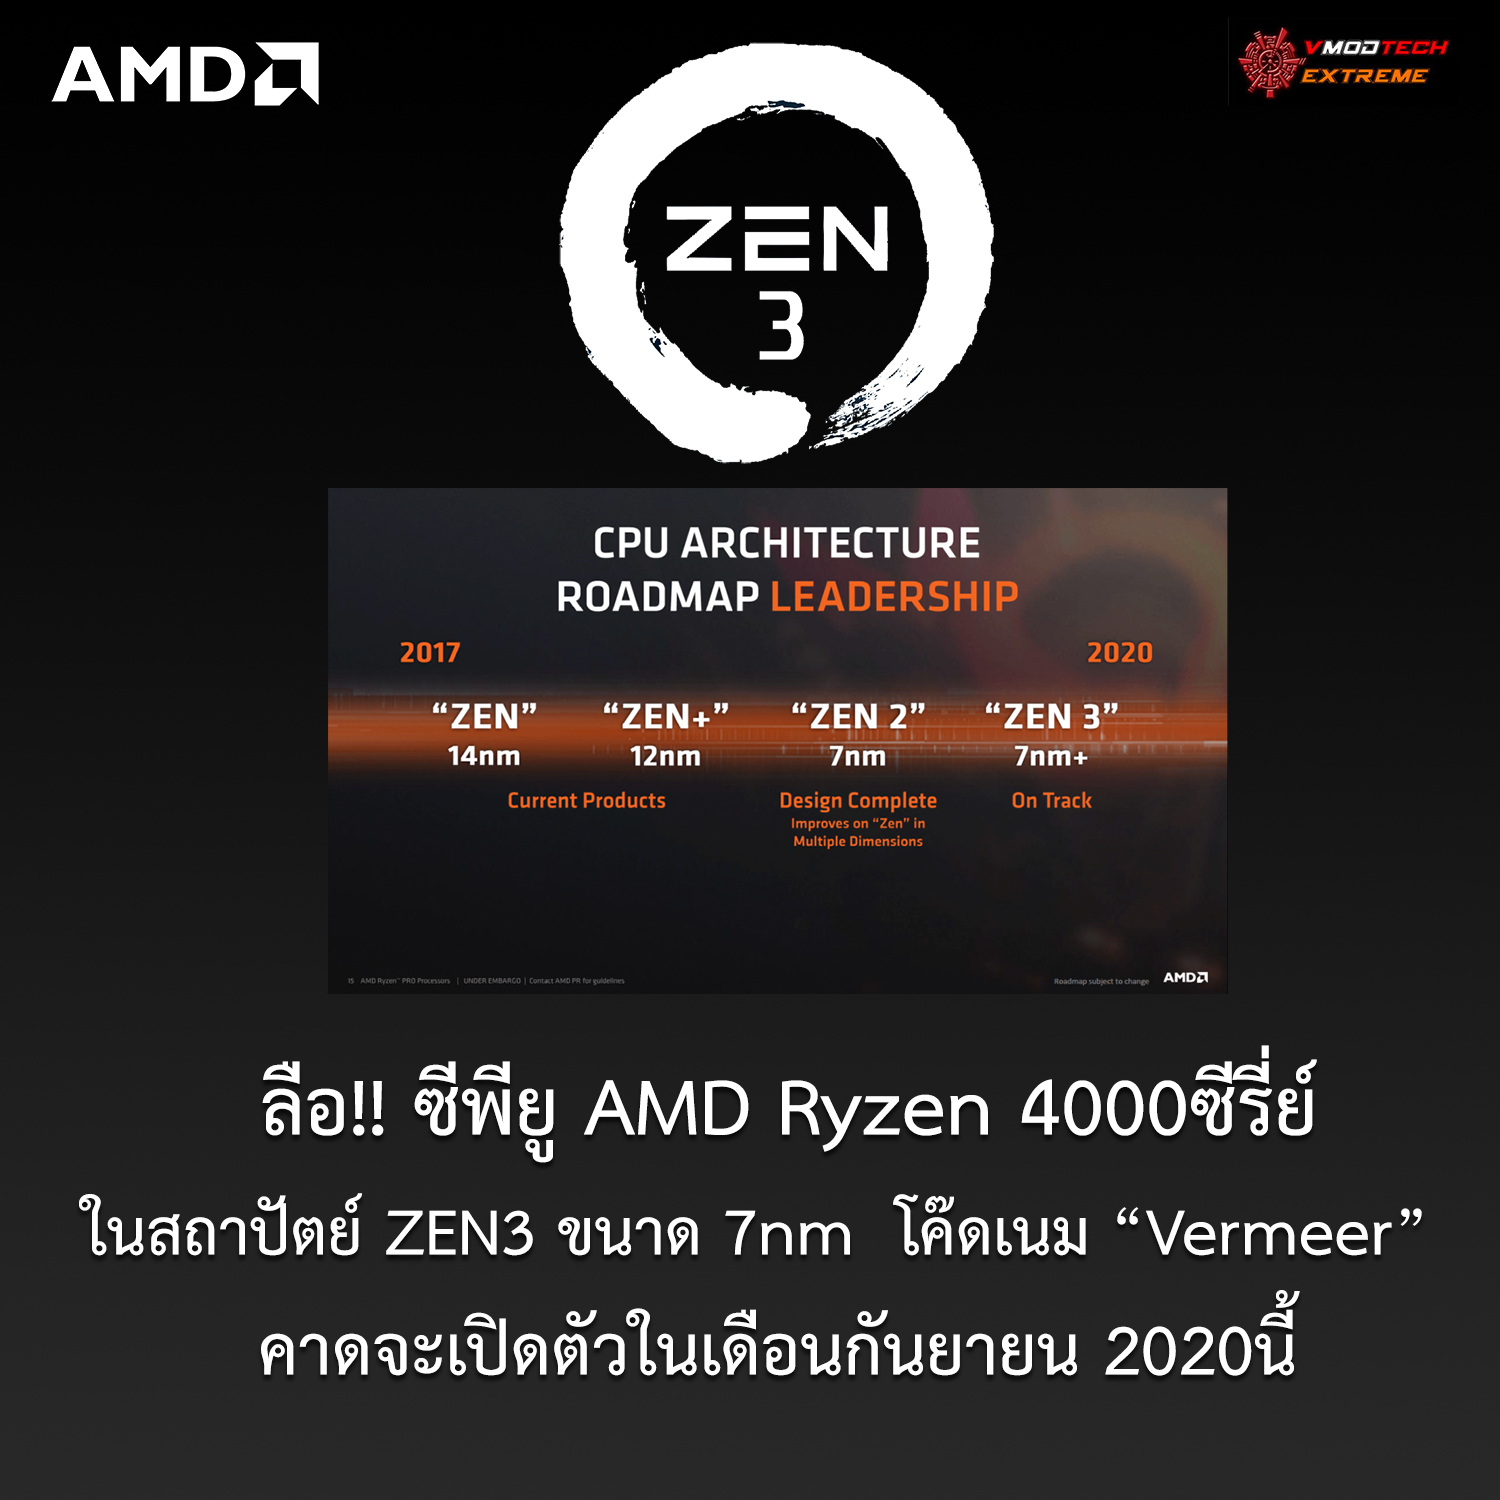 amd ryzen 4000 vermeer launch september ลือ!! ซีพียู AMD Ryzen 4000ซีรี่ย์ในสถาปัตย์ ZEN3 รุ่นใหม่ล่าสุดคาดจะเปิดตัวในเดือนกันยายน 2020นี้ 